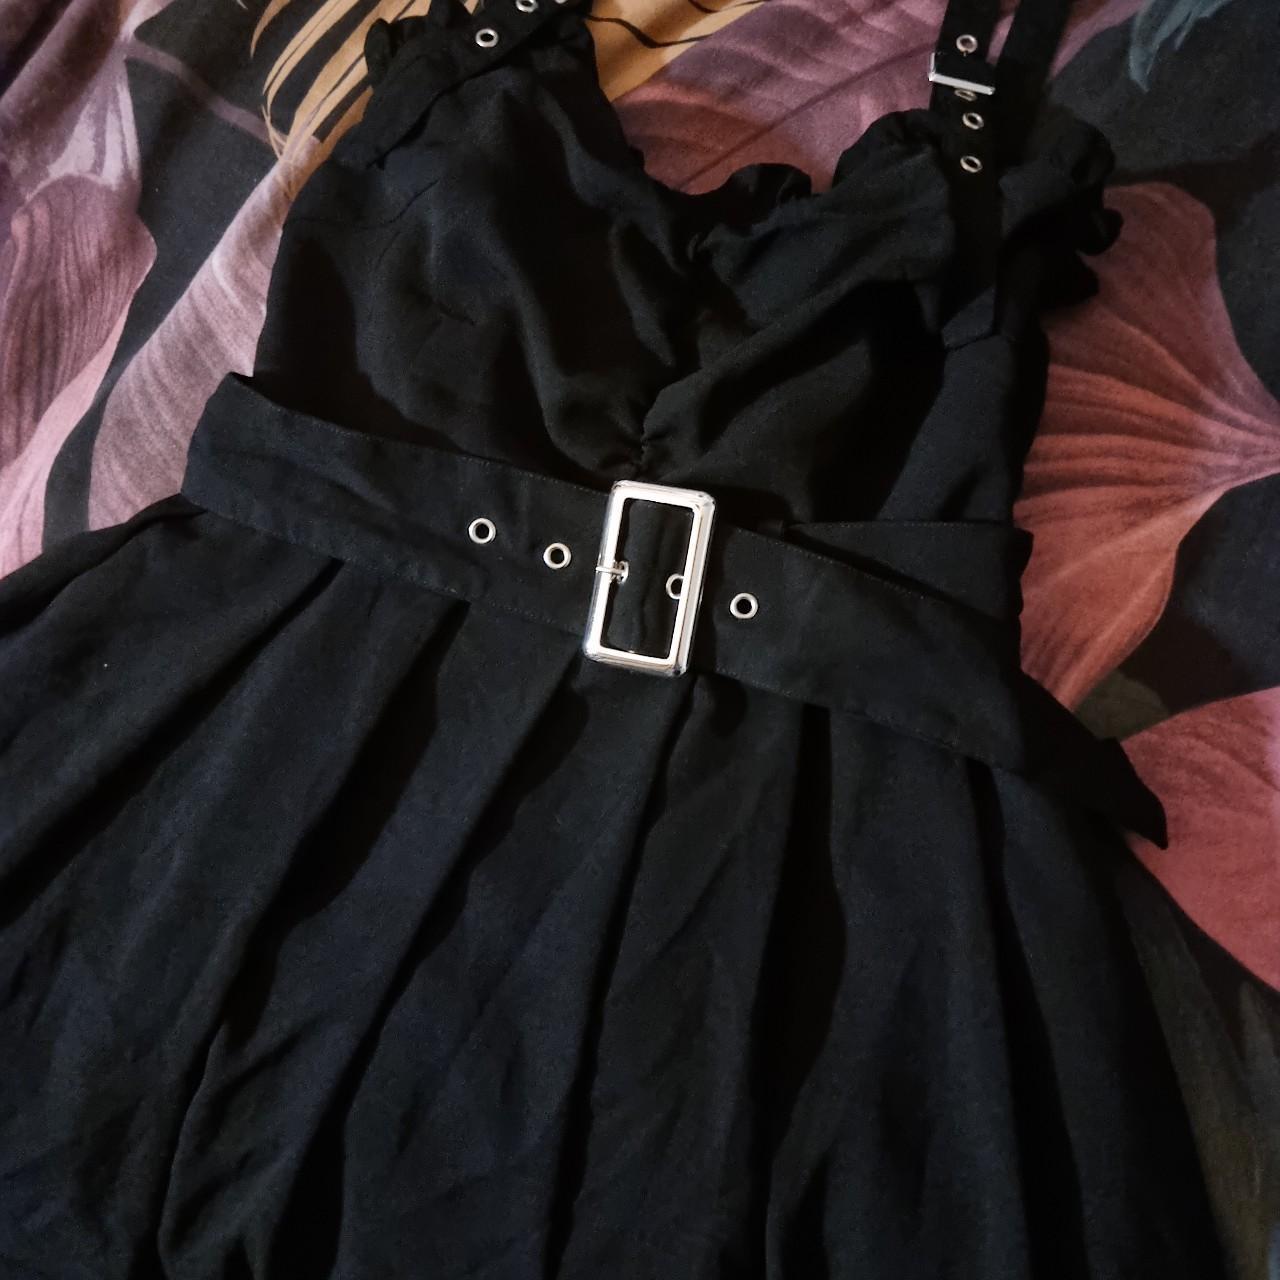 Black JSK Dress Jirai kei / lolita style dress,... - Depop